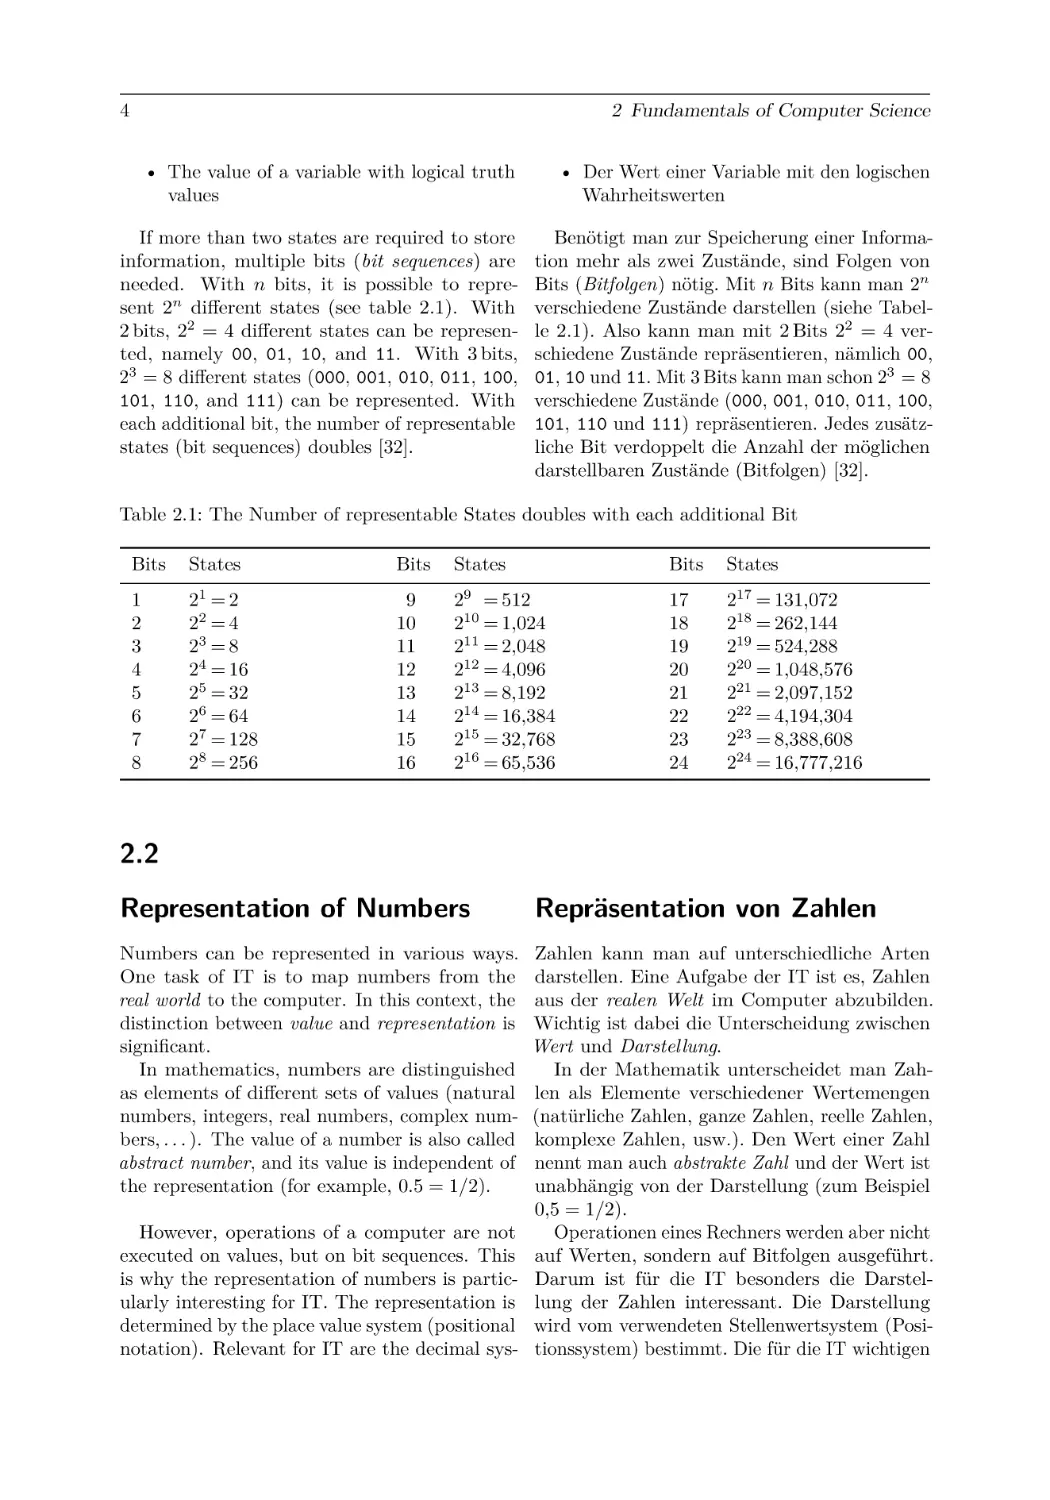 2.2
Representation of Numbers